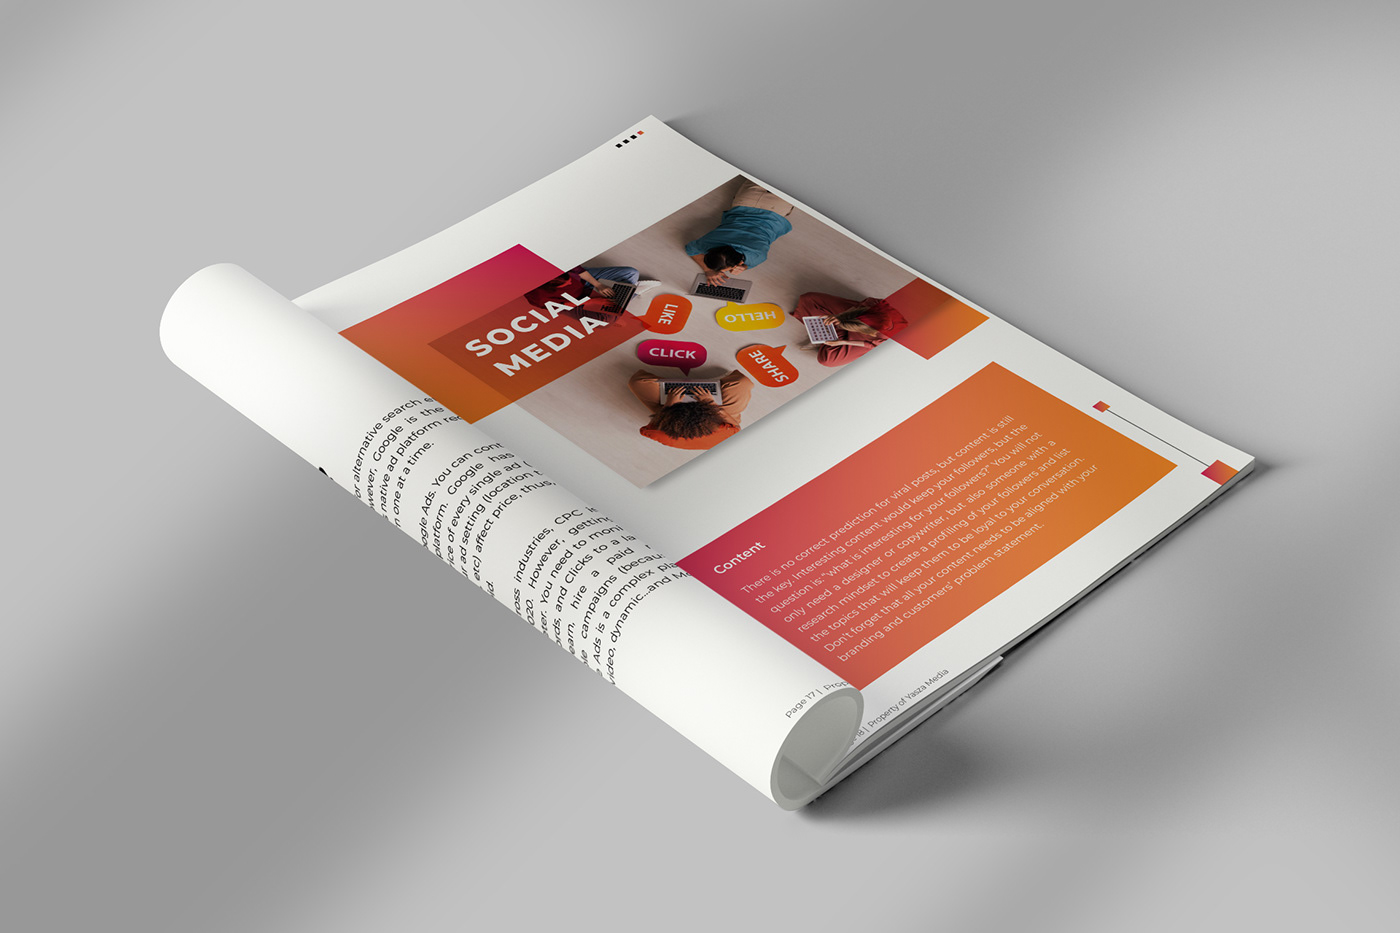 agency click magnet digital download digital marketing e-book ebook free download pdf